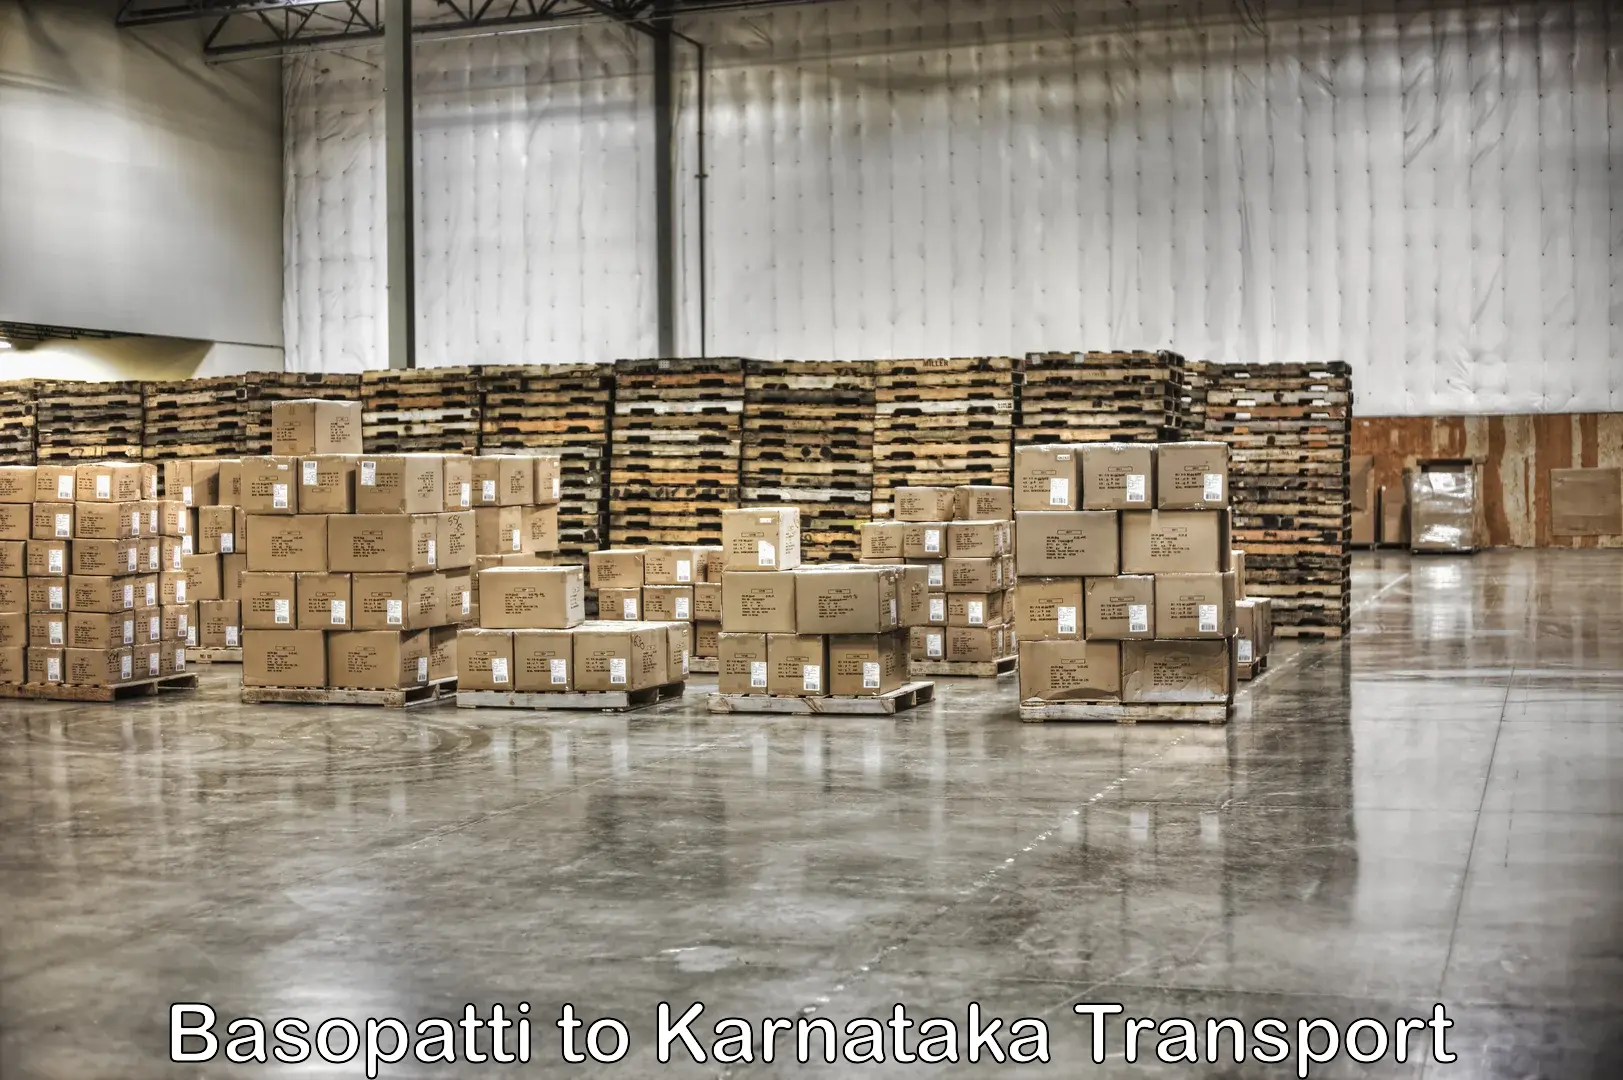 Truck transport companies in India Basopatti to Kulshekar